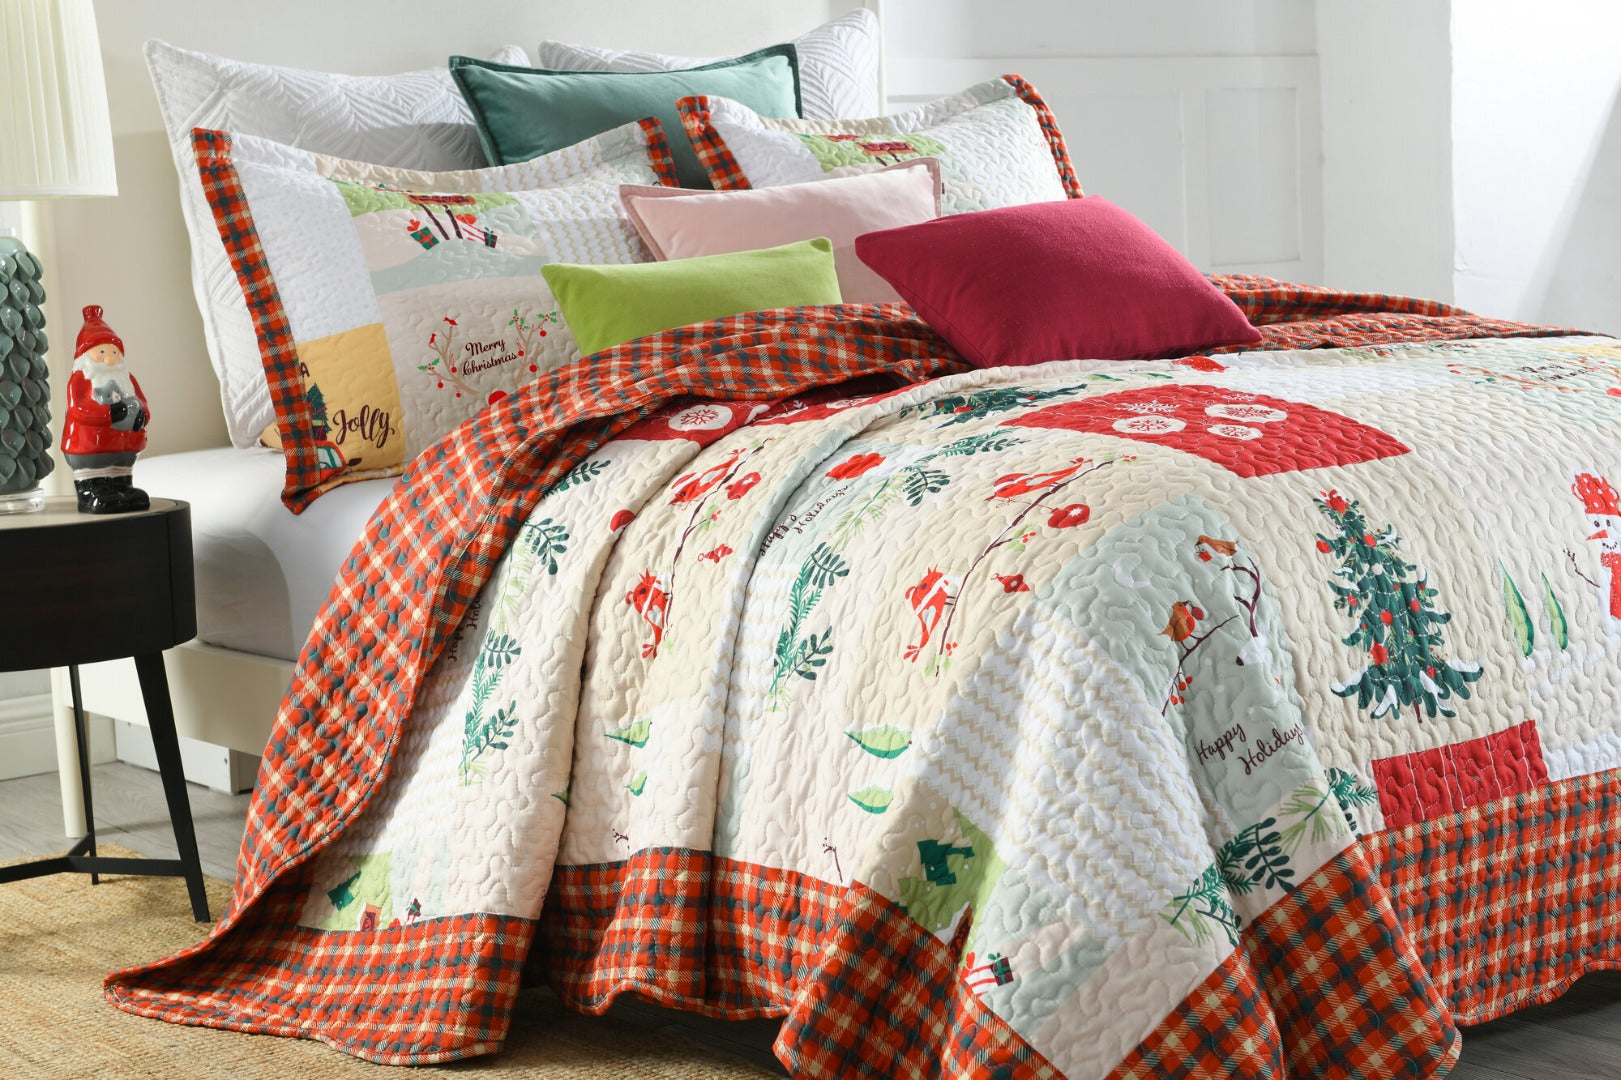 Christmas Quilt Set Bedspread set B022